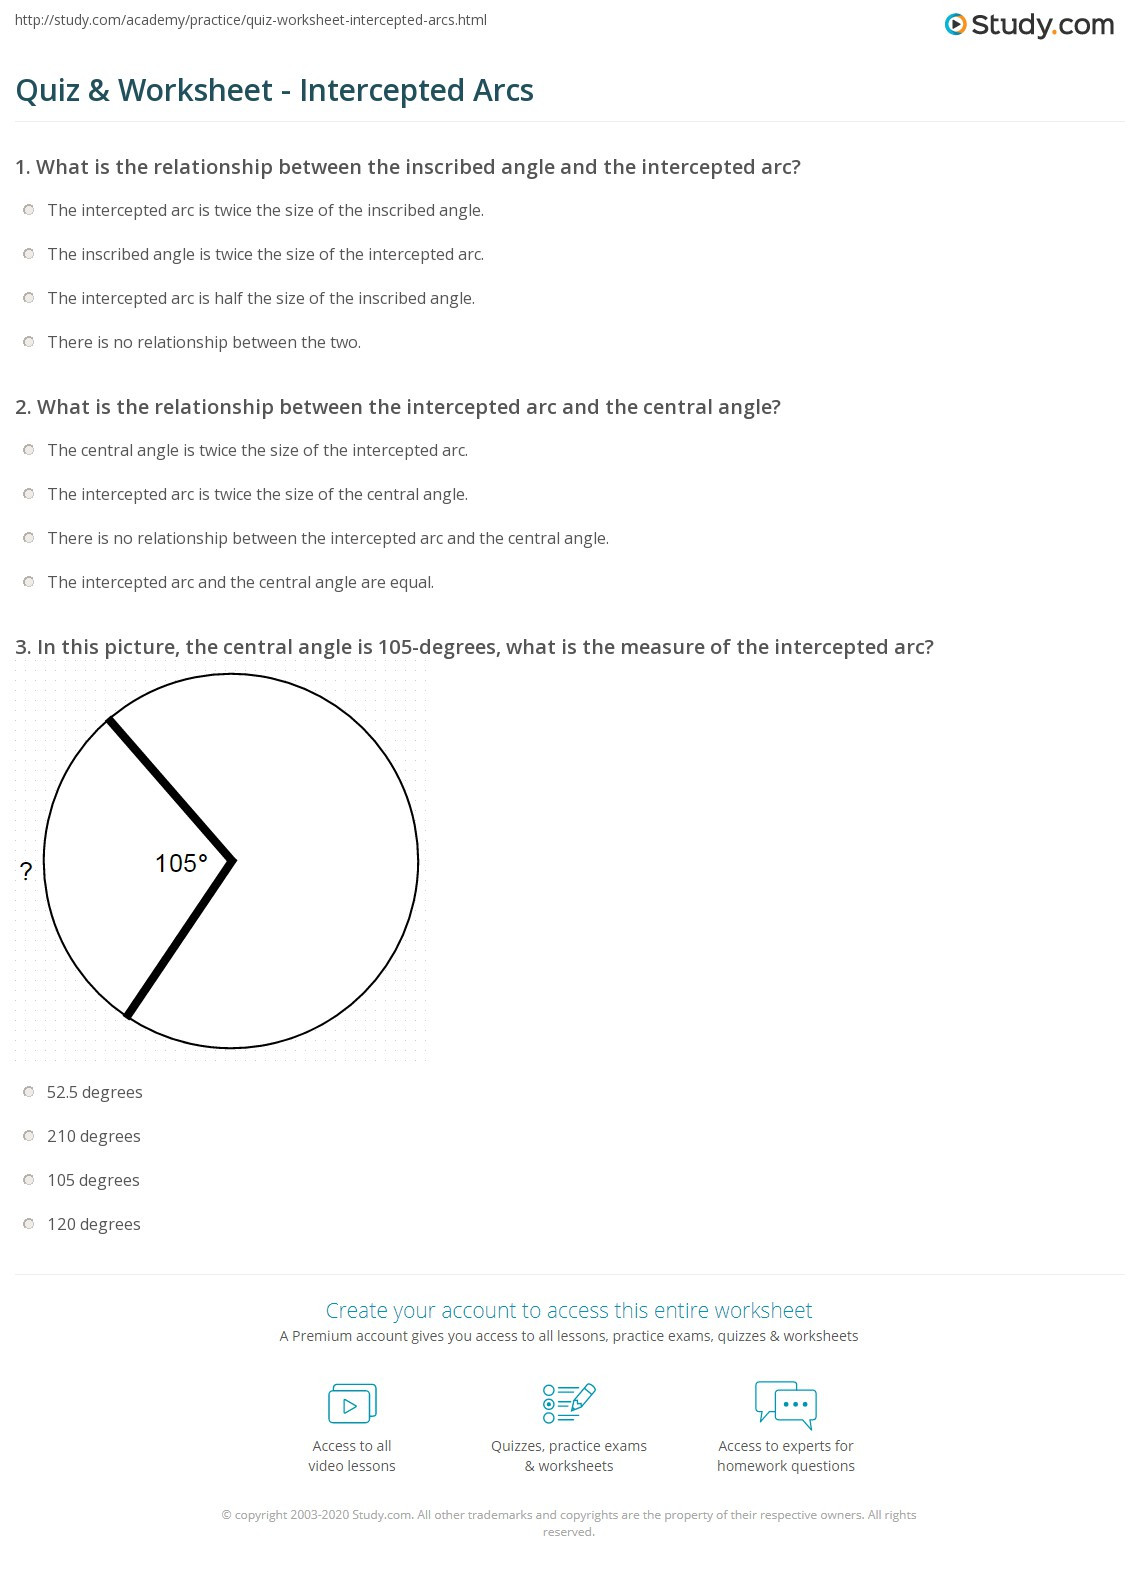 Central and Inscribed Angle Worksheet Quiz &amp; Worksheet Intercepted Arcs